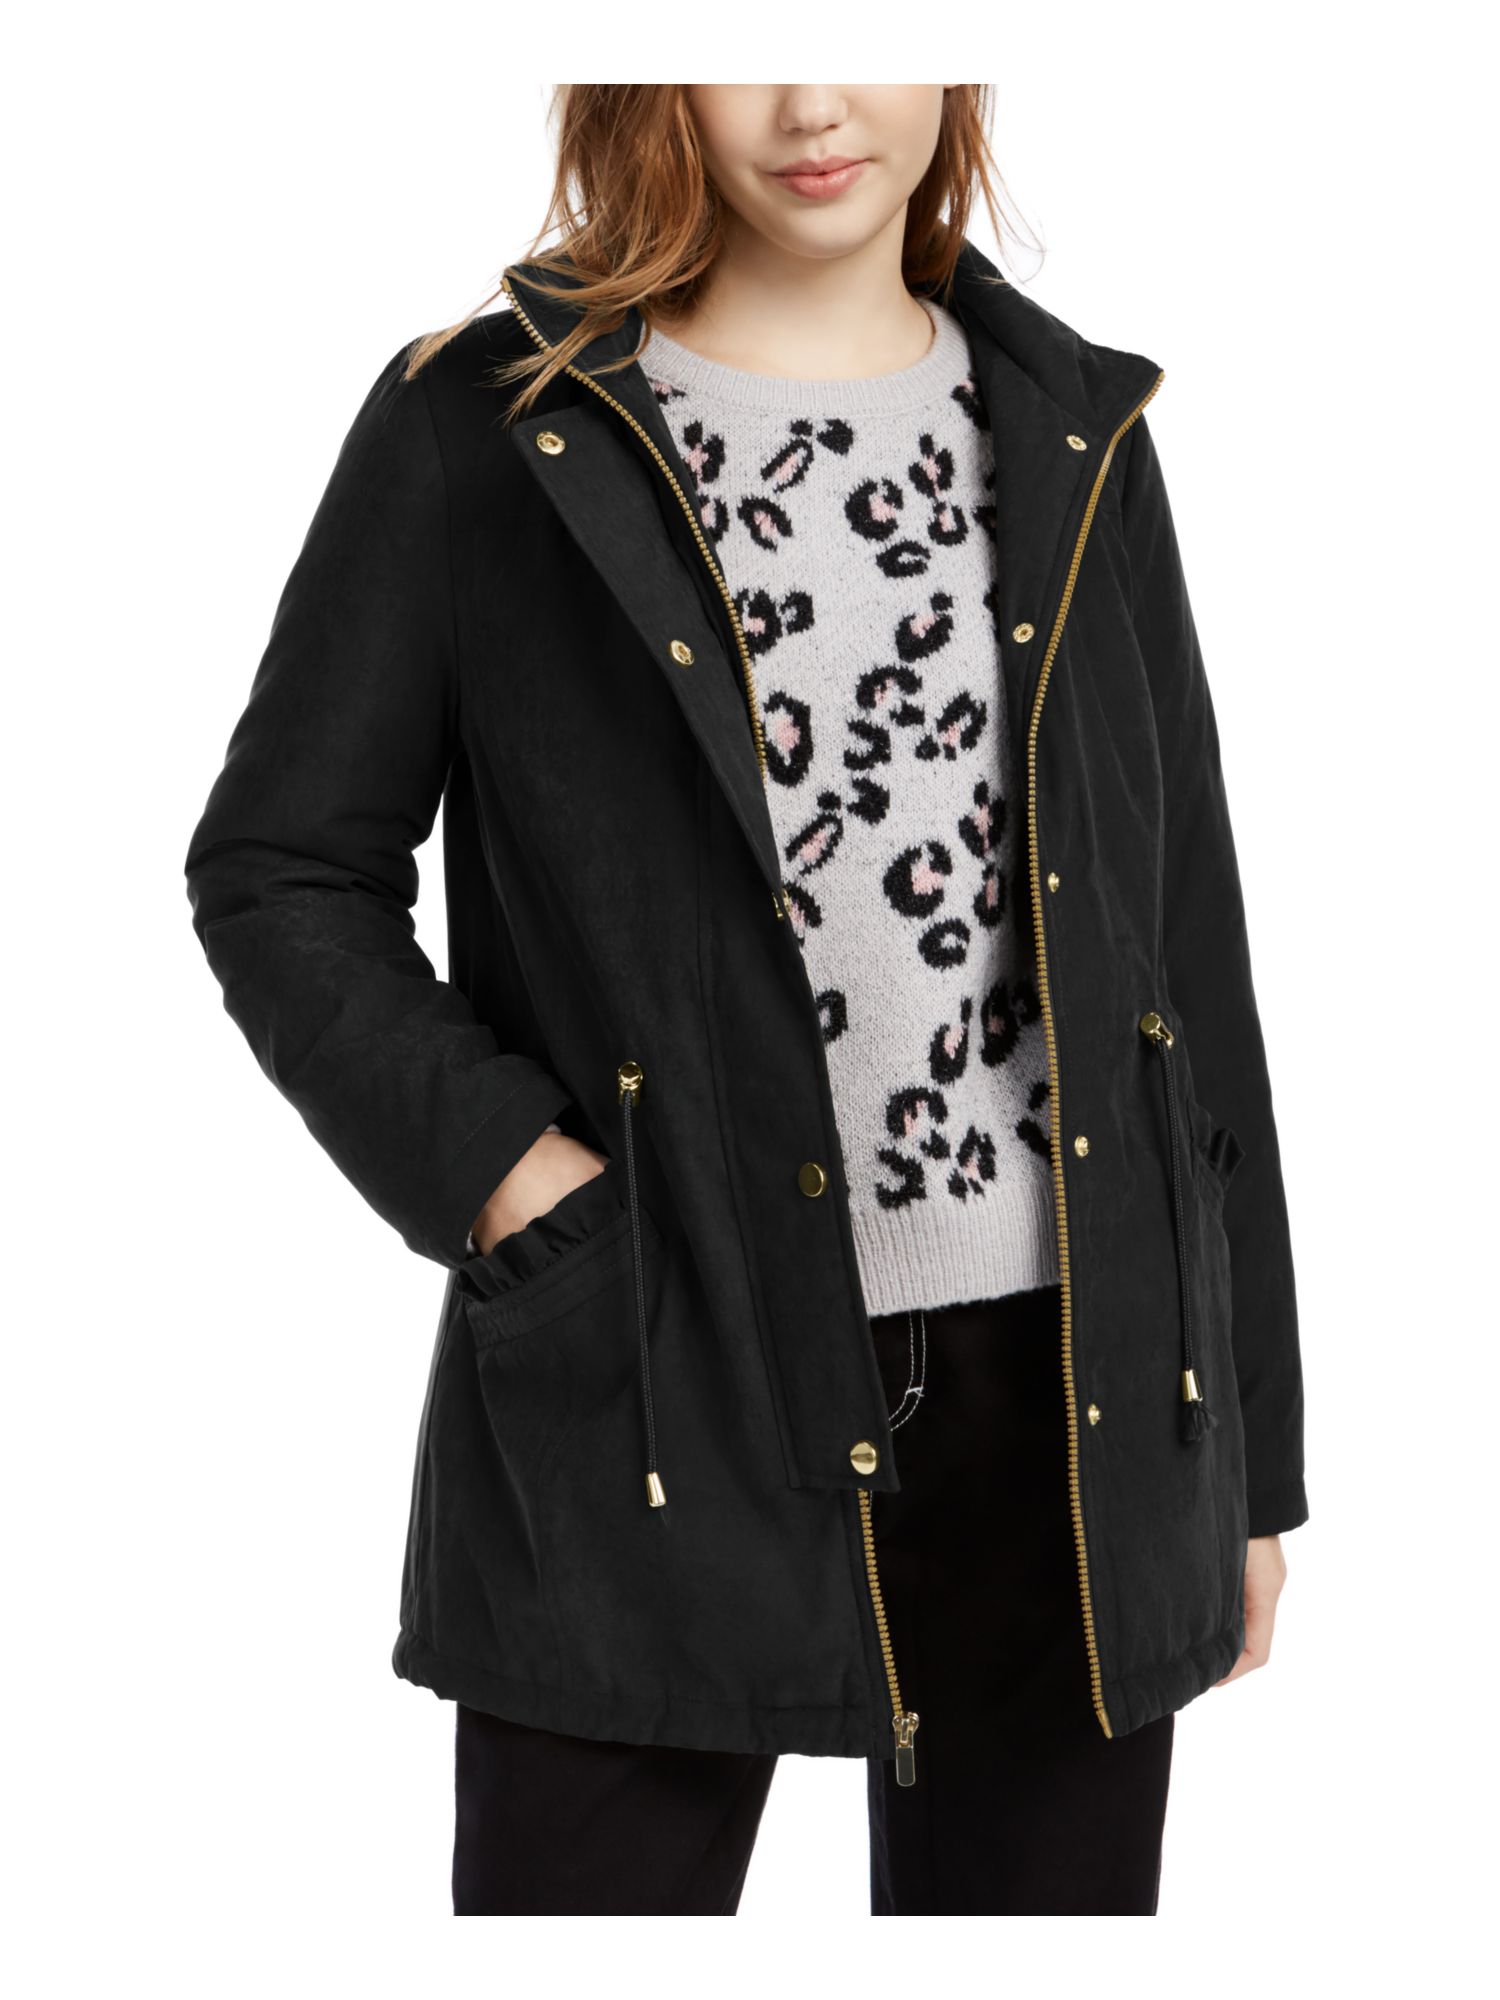 CELEBRITY PINK Womens Black Parka Winter Jacket Coat Juniors S - image 3 of 4